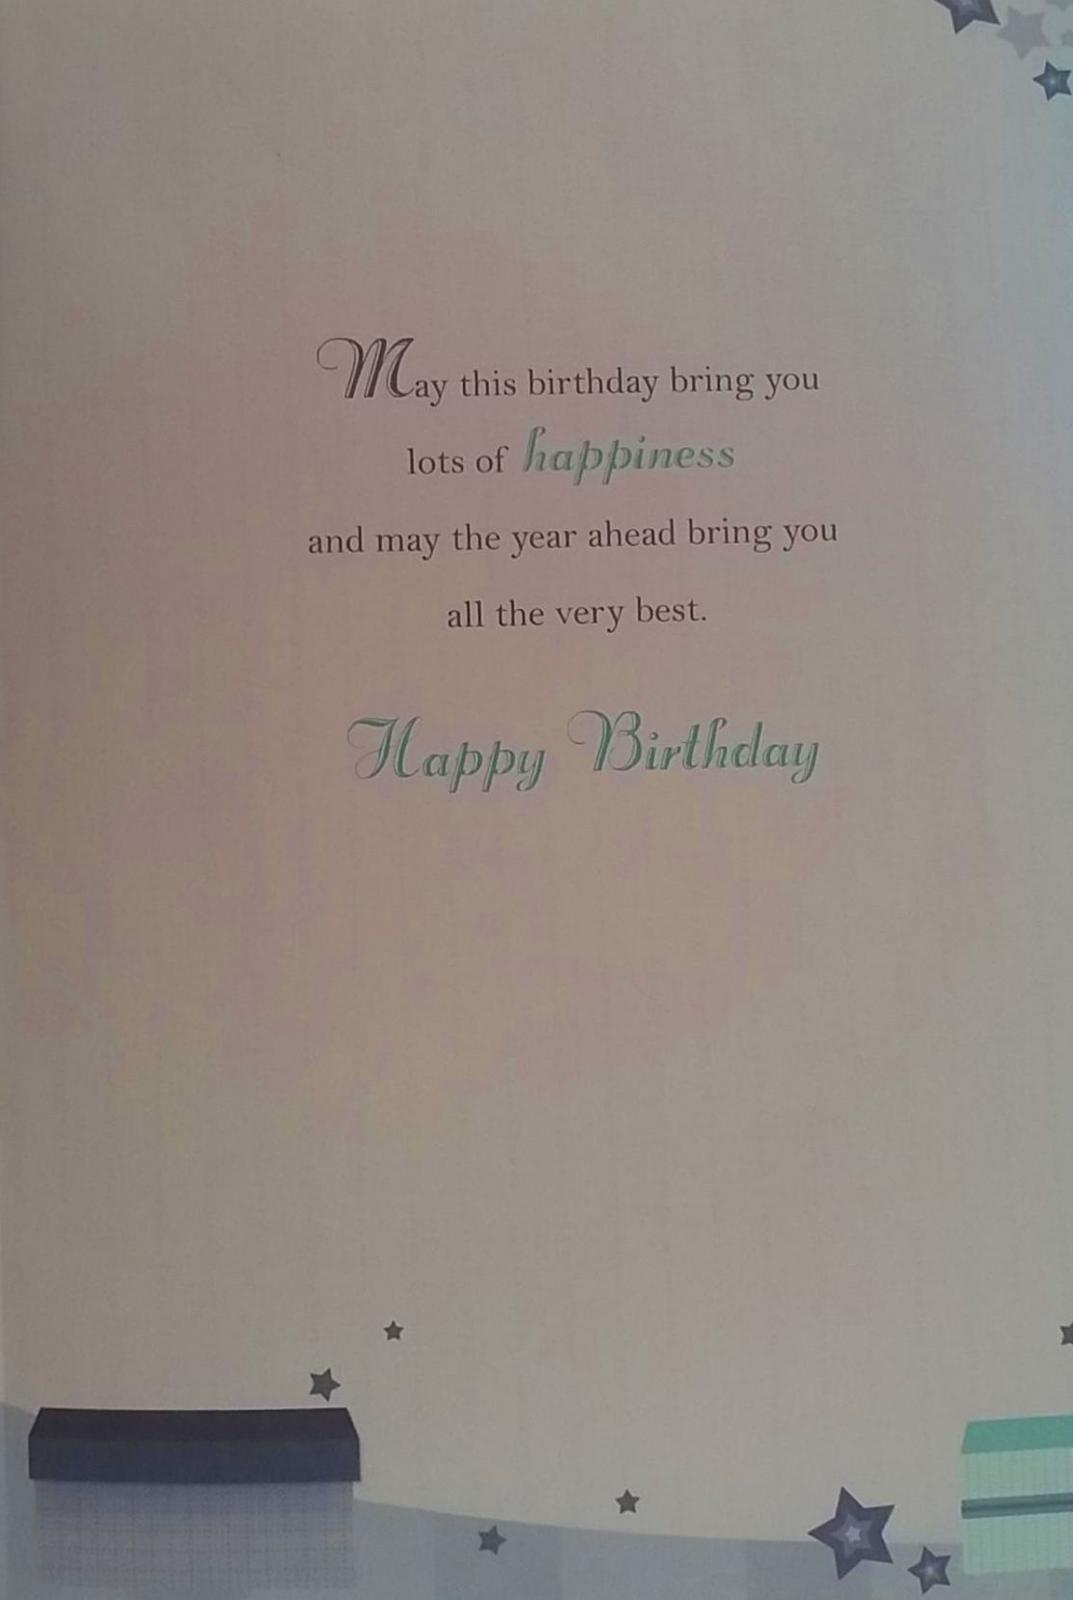 Grandson Present Design Sentimental Verse Birthday Card